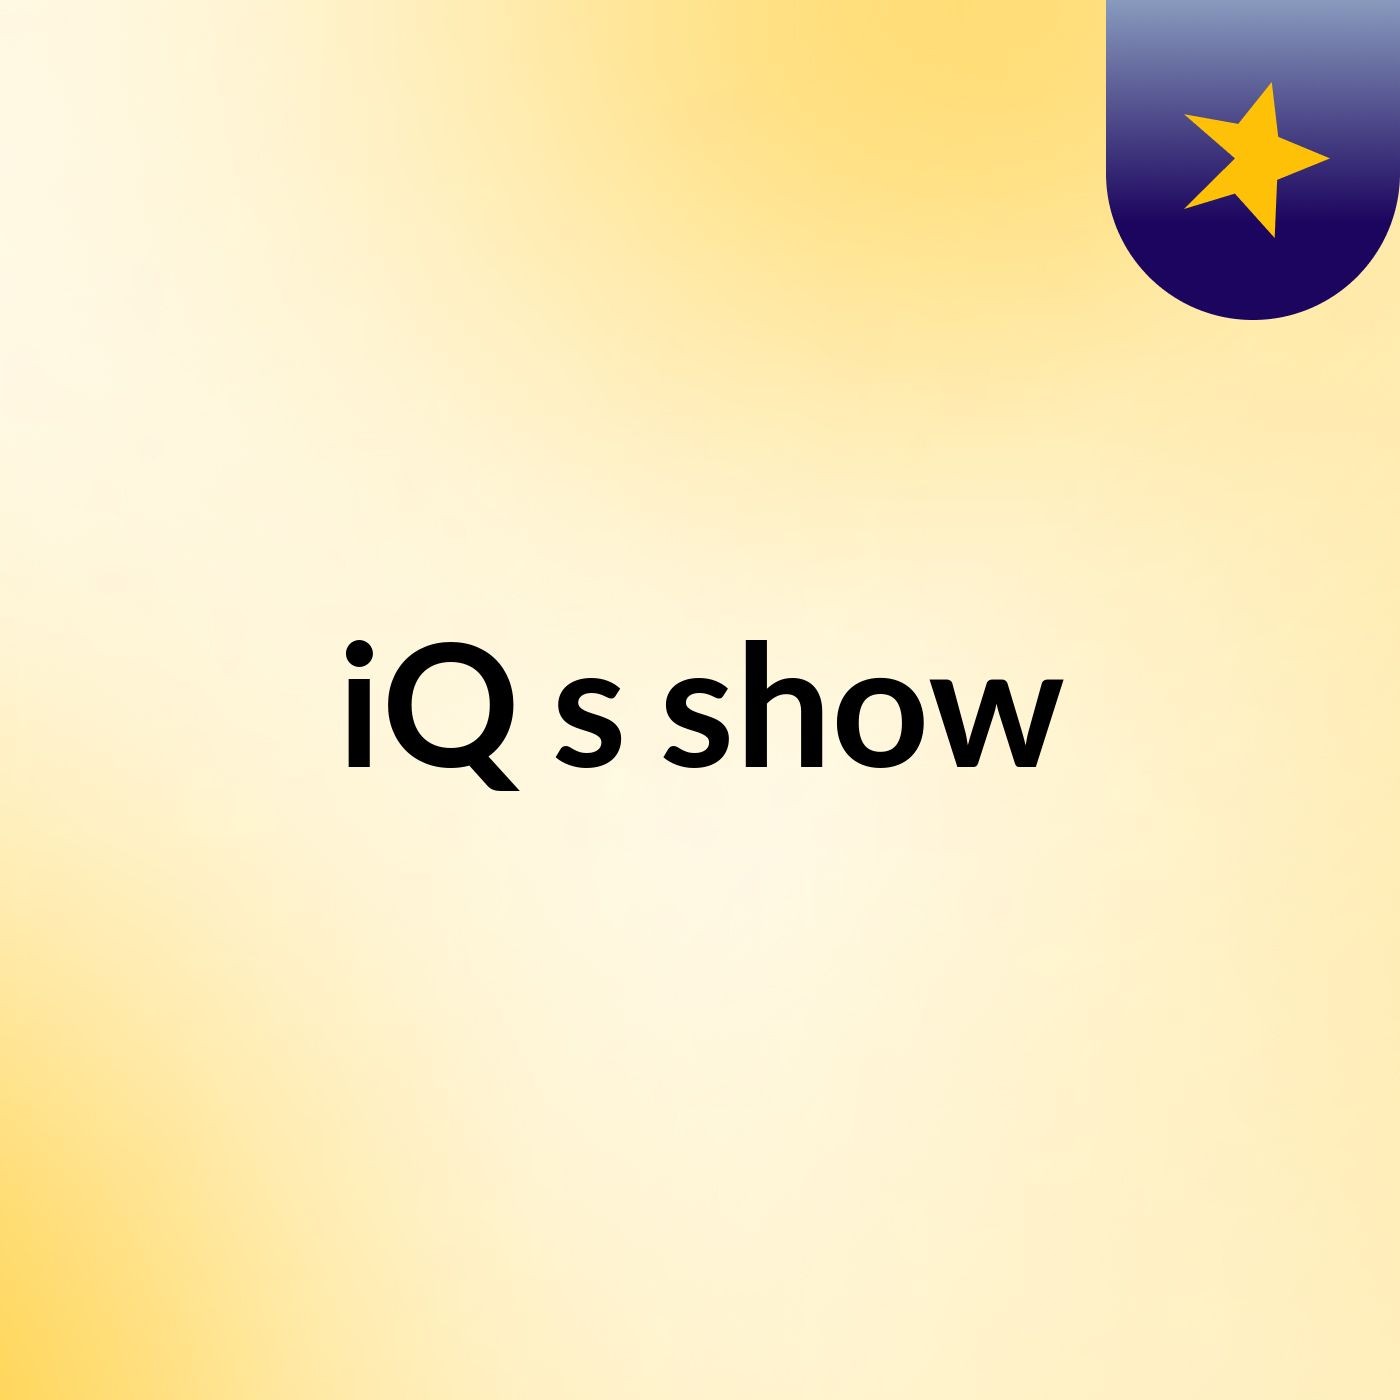 Episode 1 - iQ's show